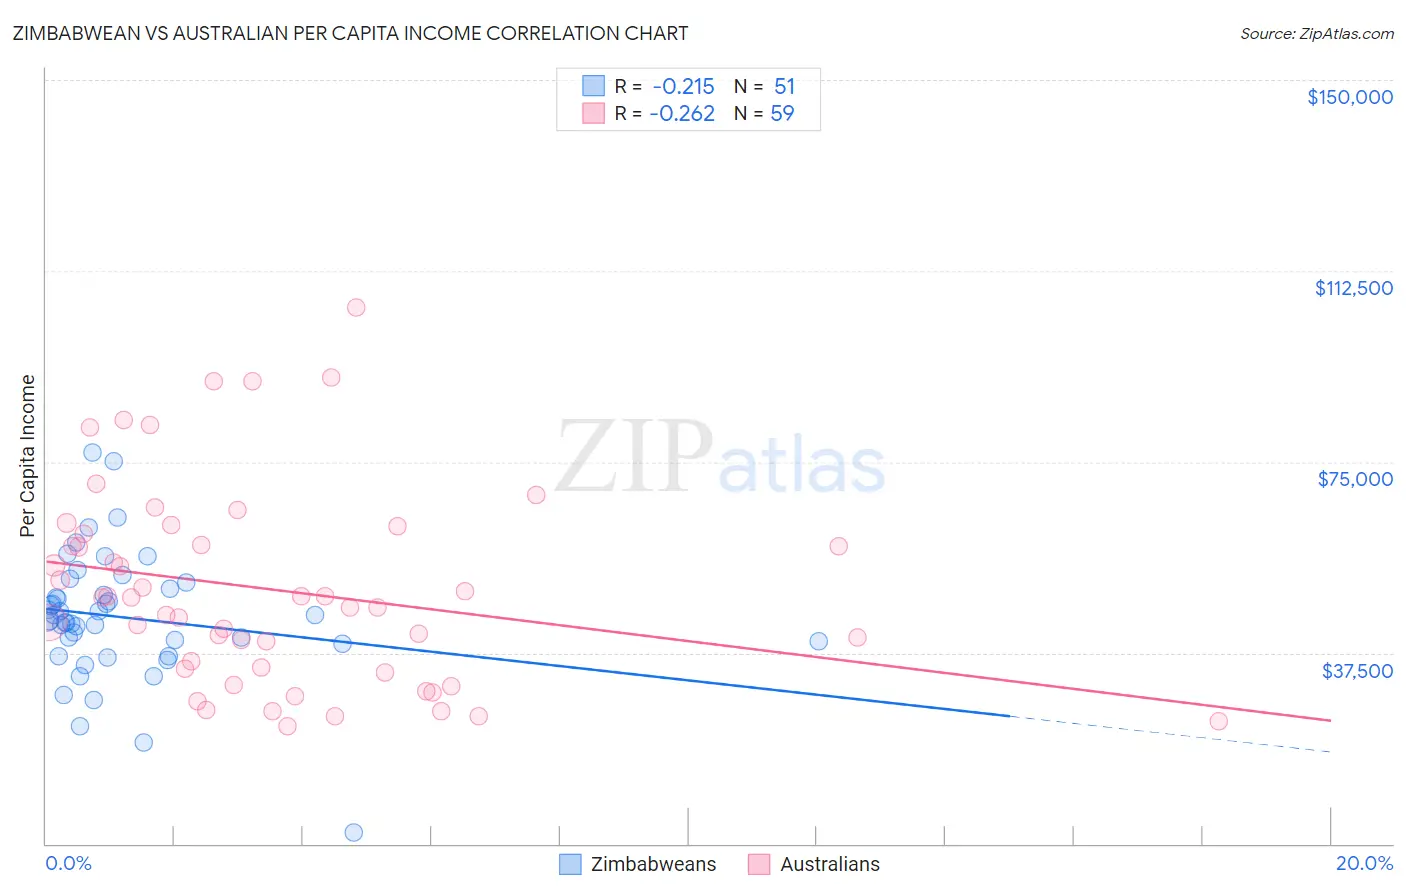 Zimbabwean vs Australian Per Capita Income